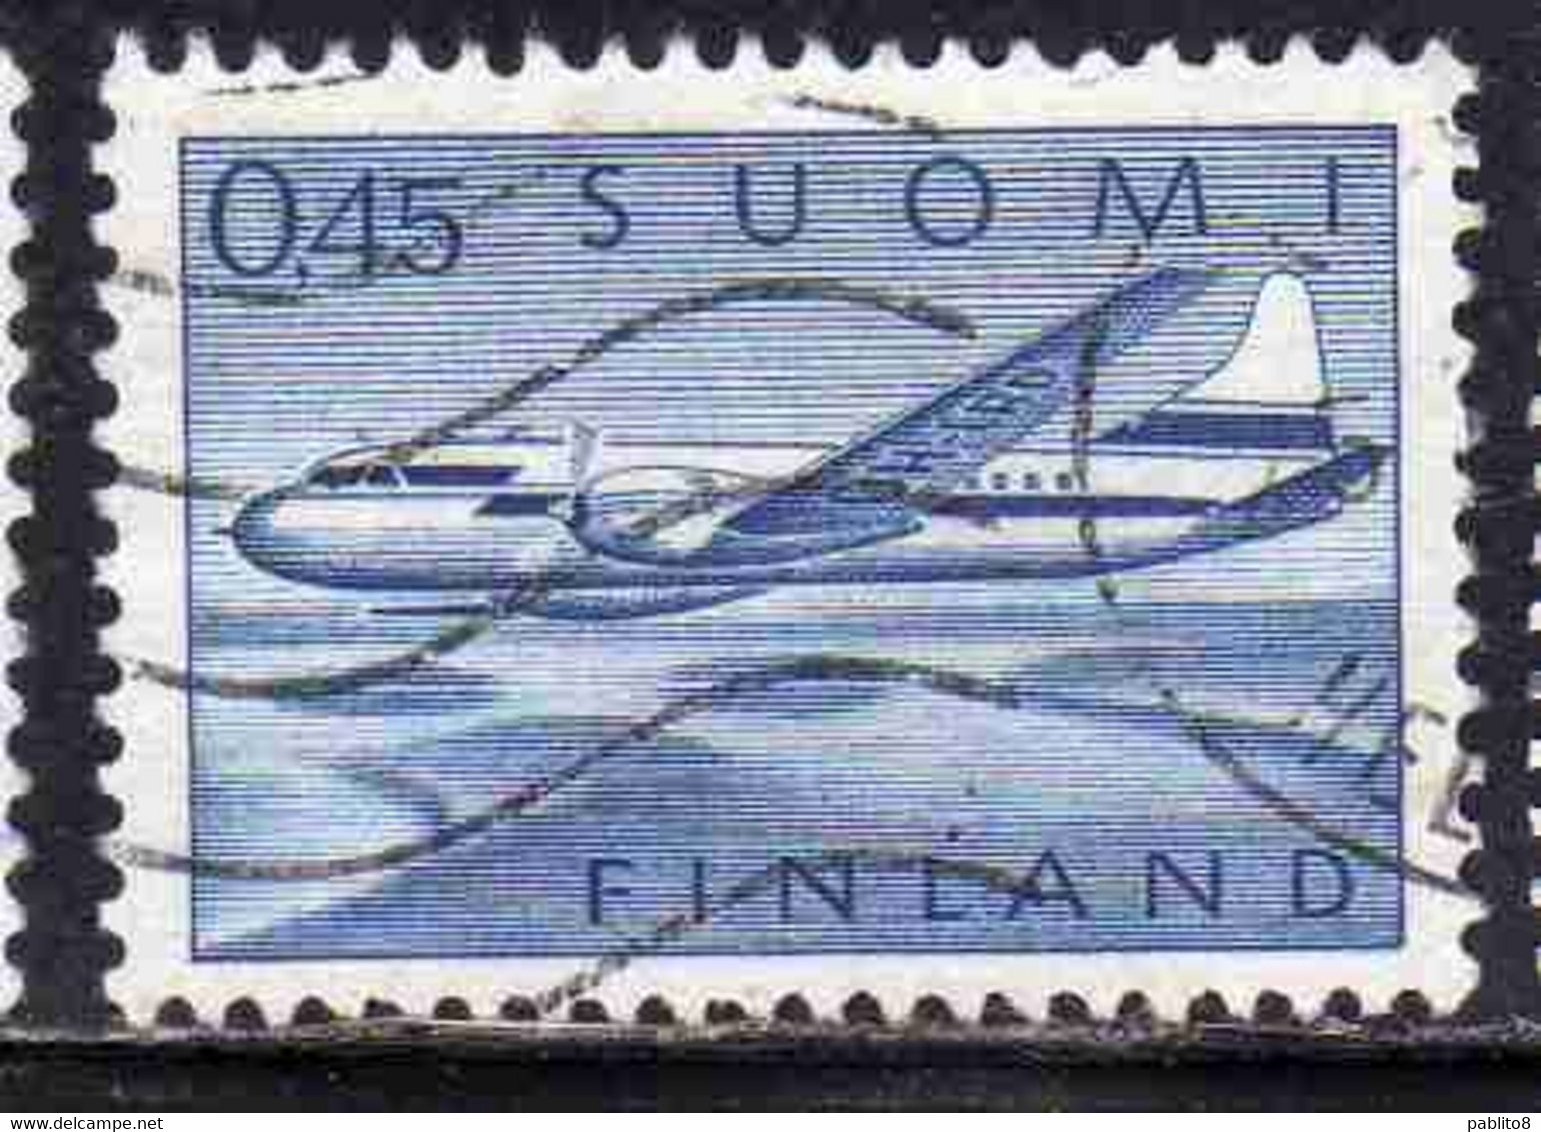 SUOMI FINLAND FINLANDIA FINLANDE 1963 AIR POST MAIL AIRMAIL CONVAIR OVER LAKES 0.45m 45p USED USATO OBLITERE' - Oblitérés